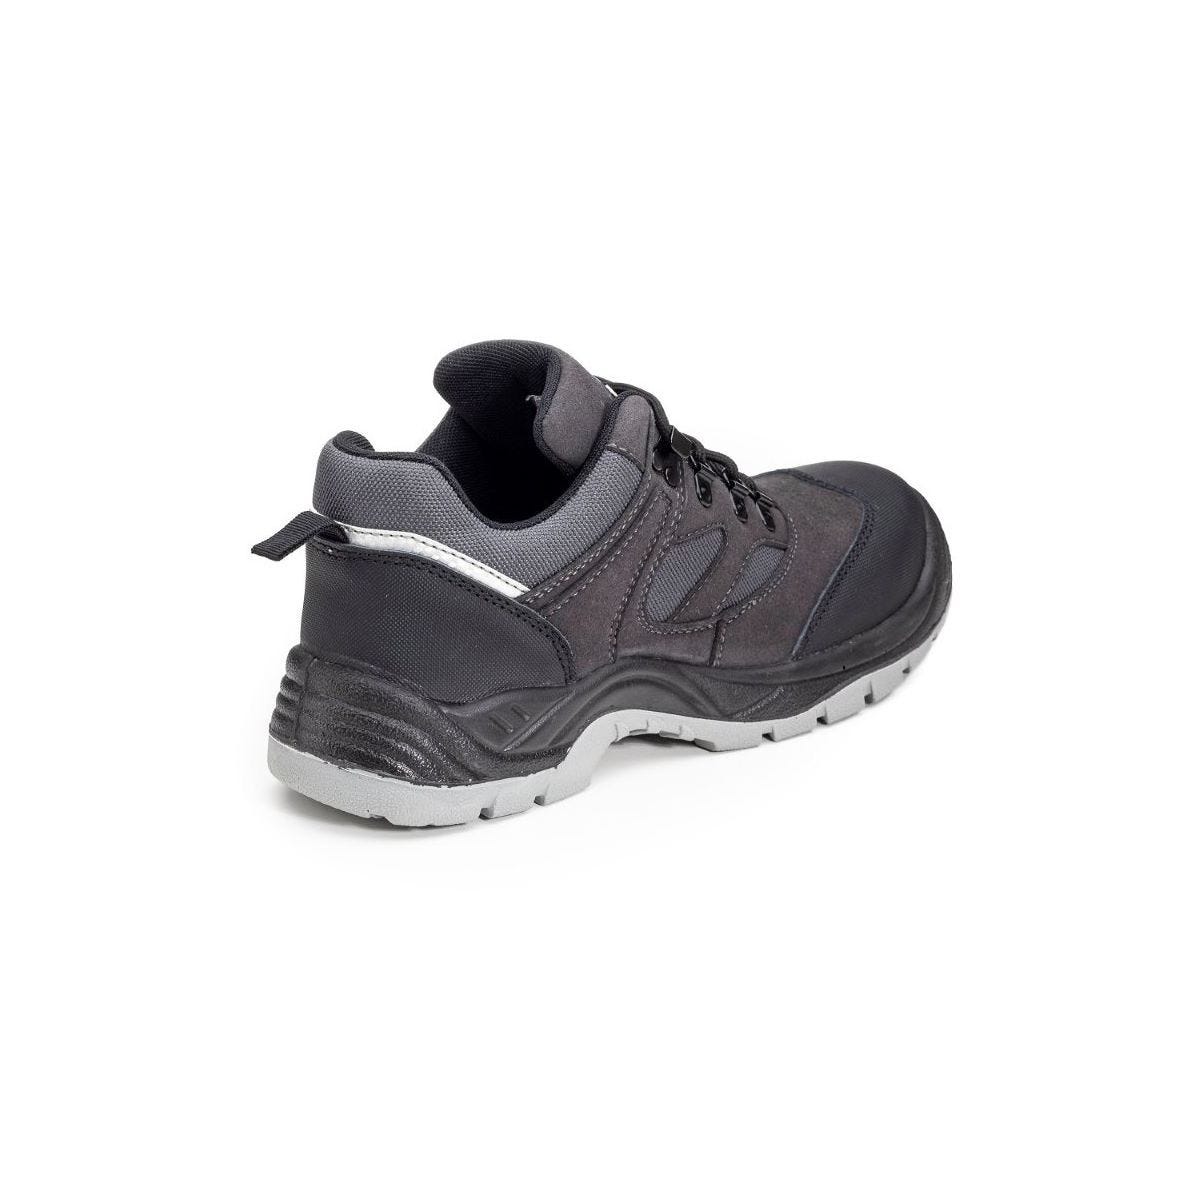 Chaussures sécurité SILVER Basse Anthracite - Coverguard - Taille 37 2